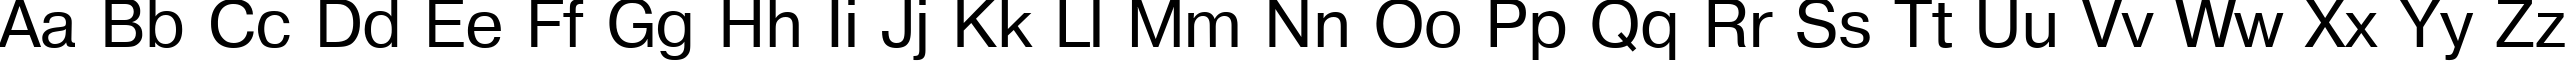 Пример написания английского алфавита шрифтом Pragmatica Plain:001.001